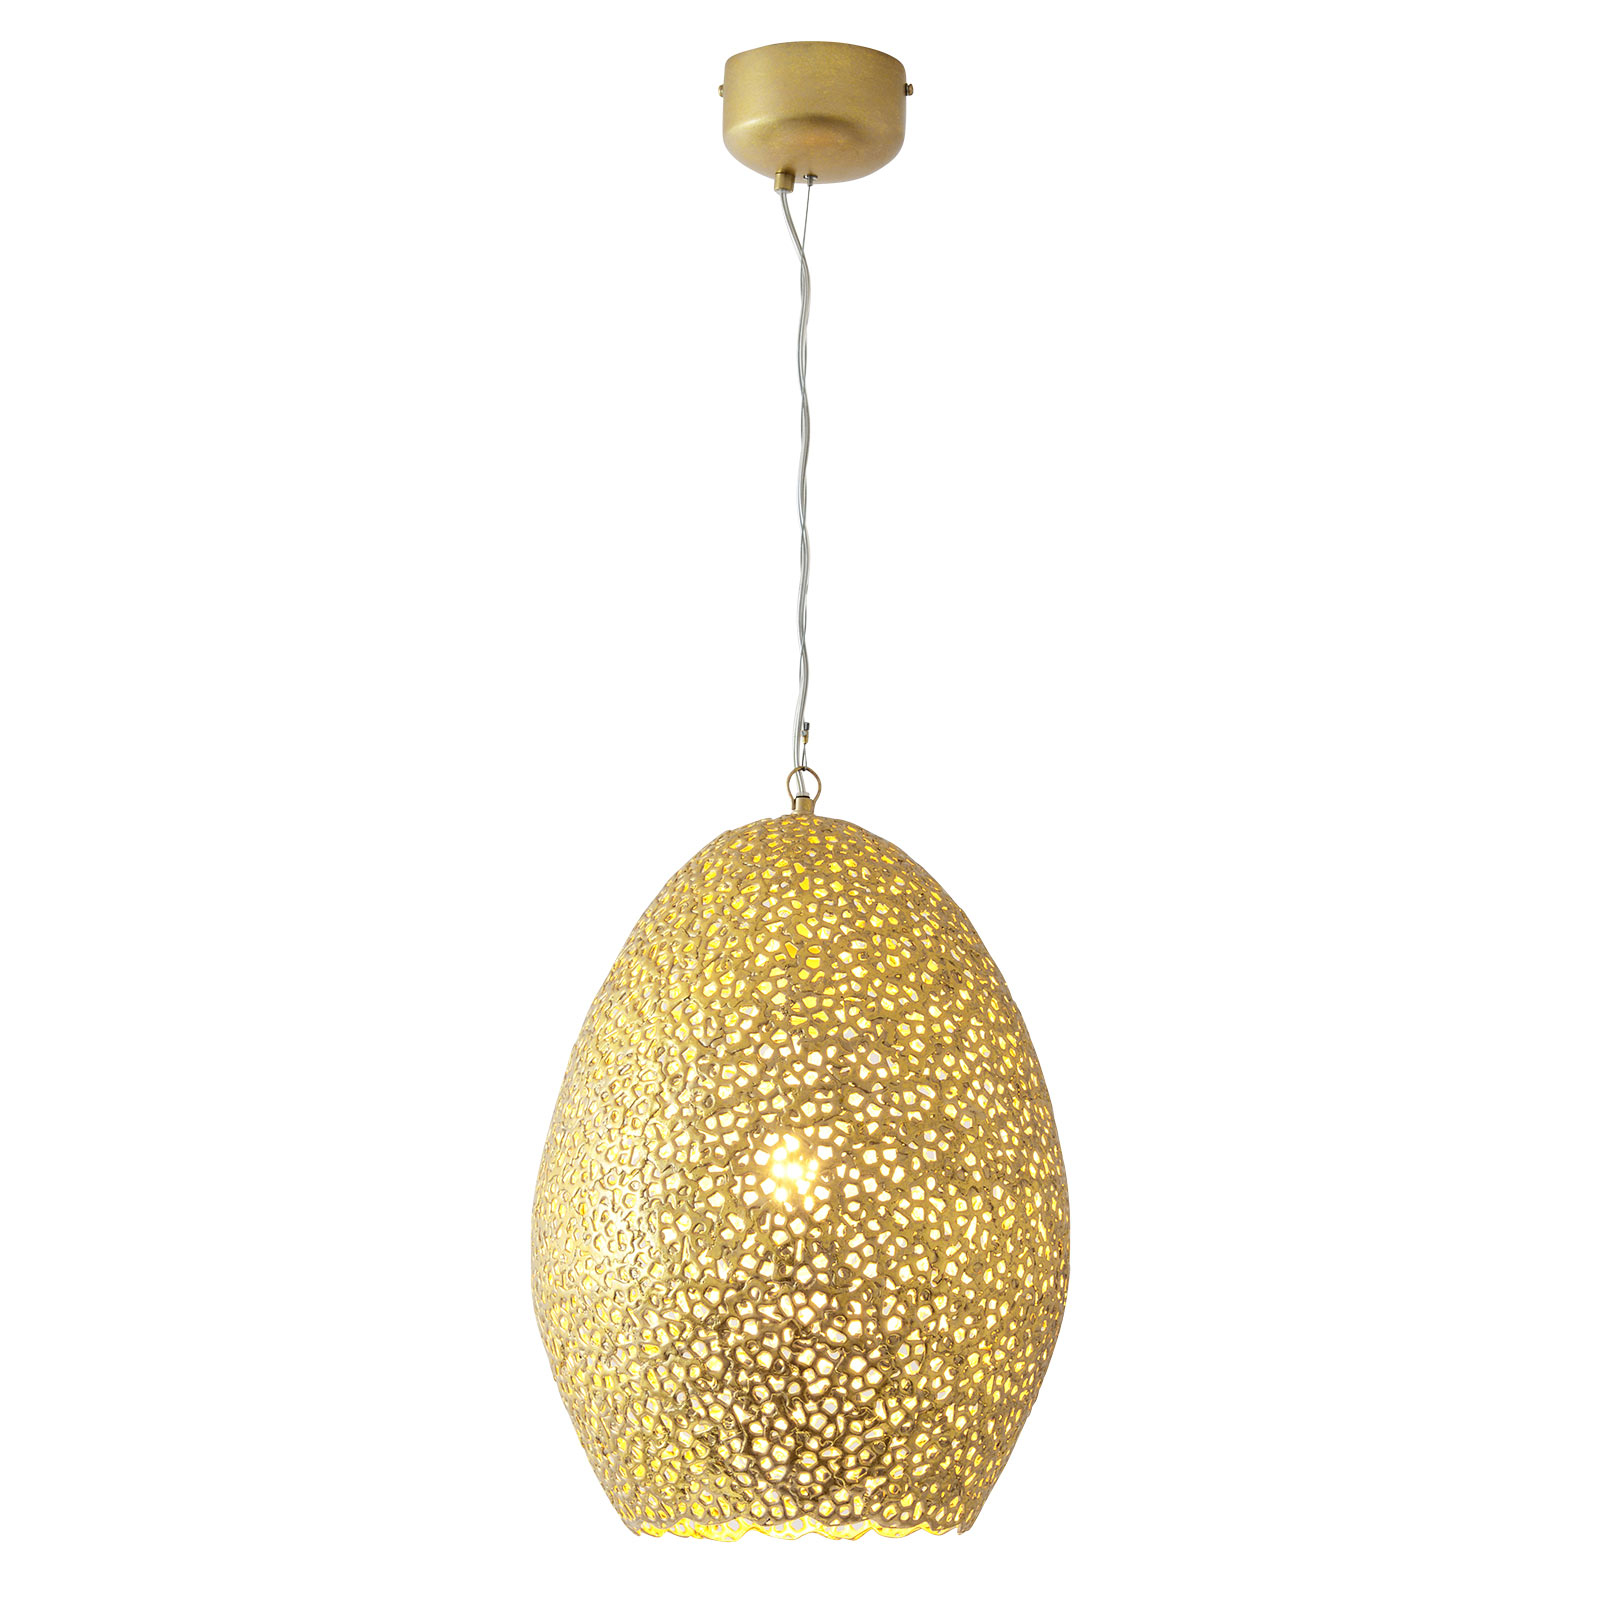 Cavalliere hanglamp, goud, Ø 34 cm